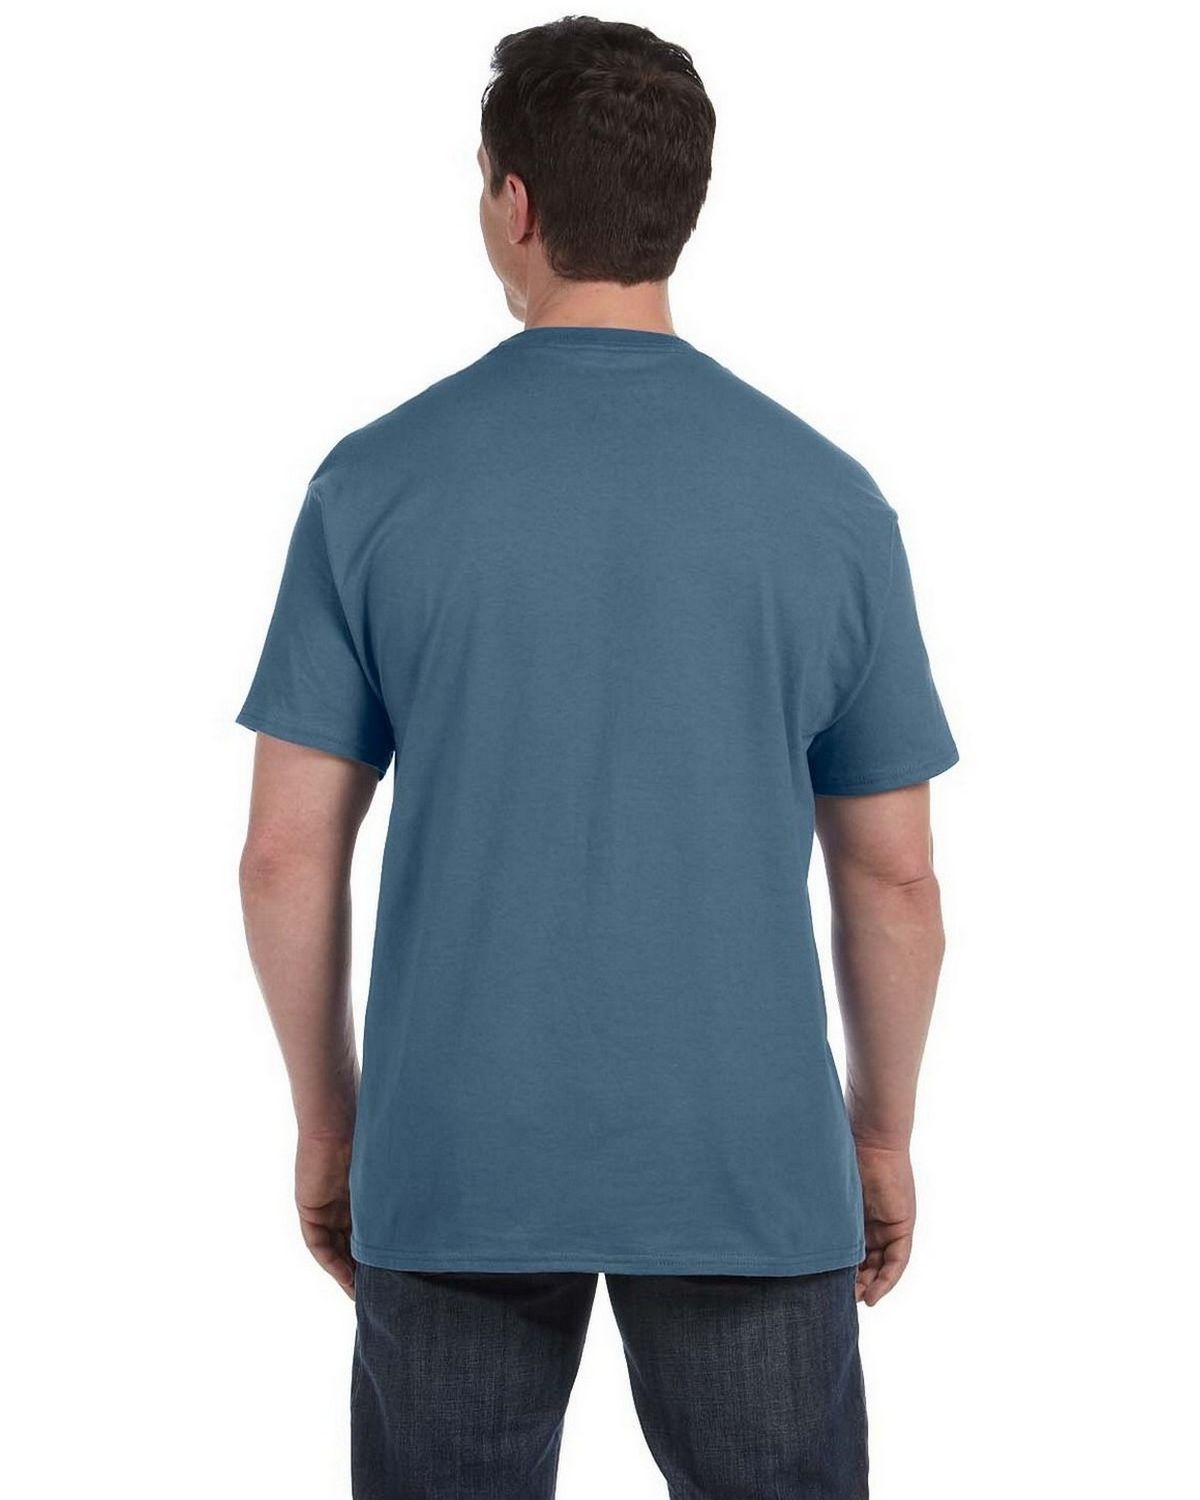 Hanes H5590 Tagless Pocket T-Shirt - ApparelnBags.com